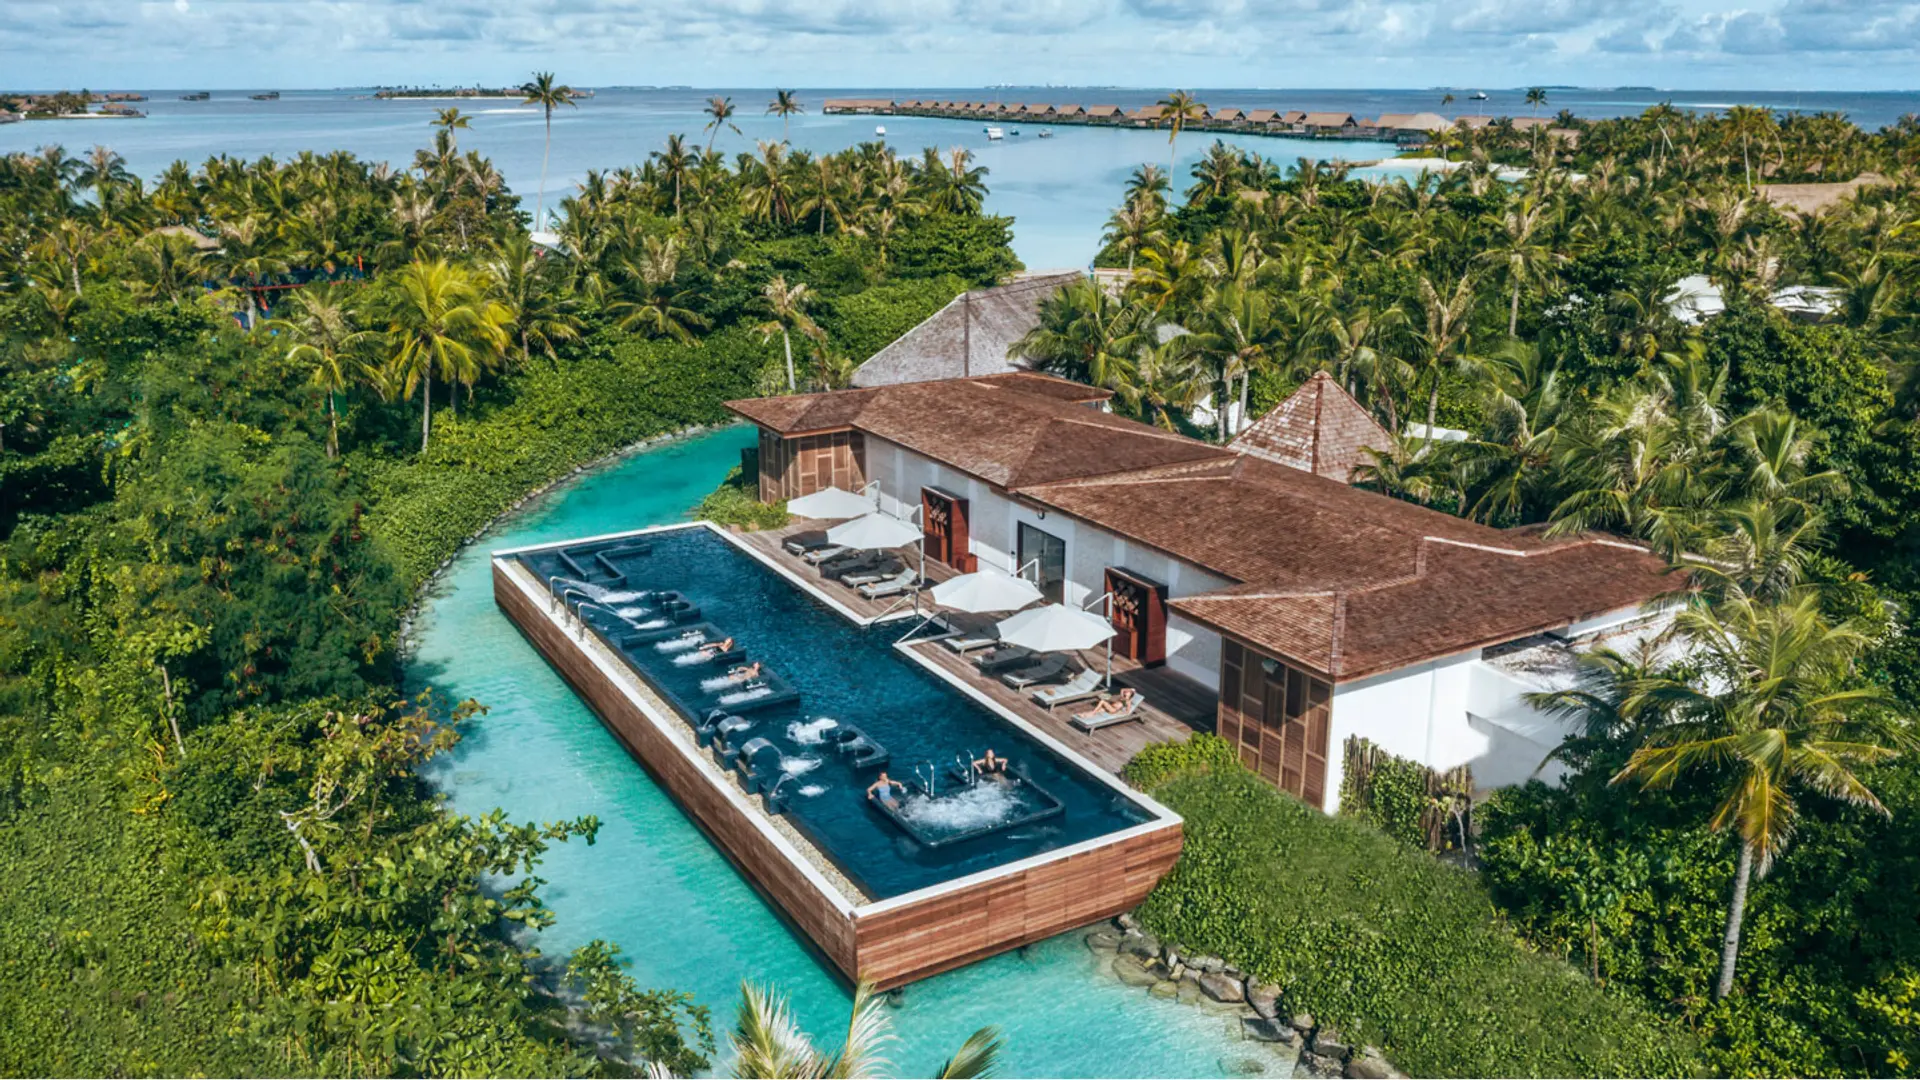 Hotel review Service & Facilities' - Waldorf Astoria Maldives Ithaafushi - 10